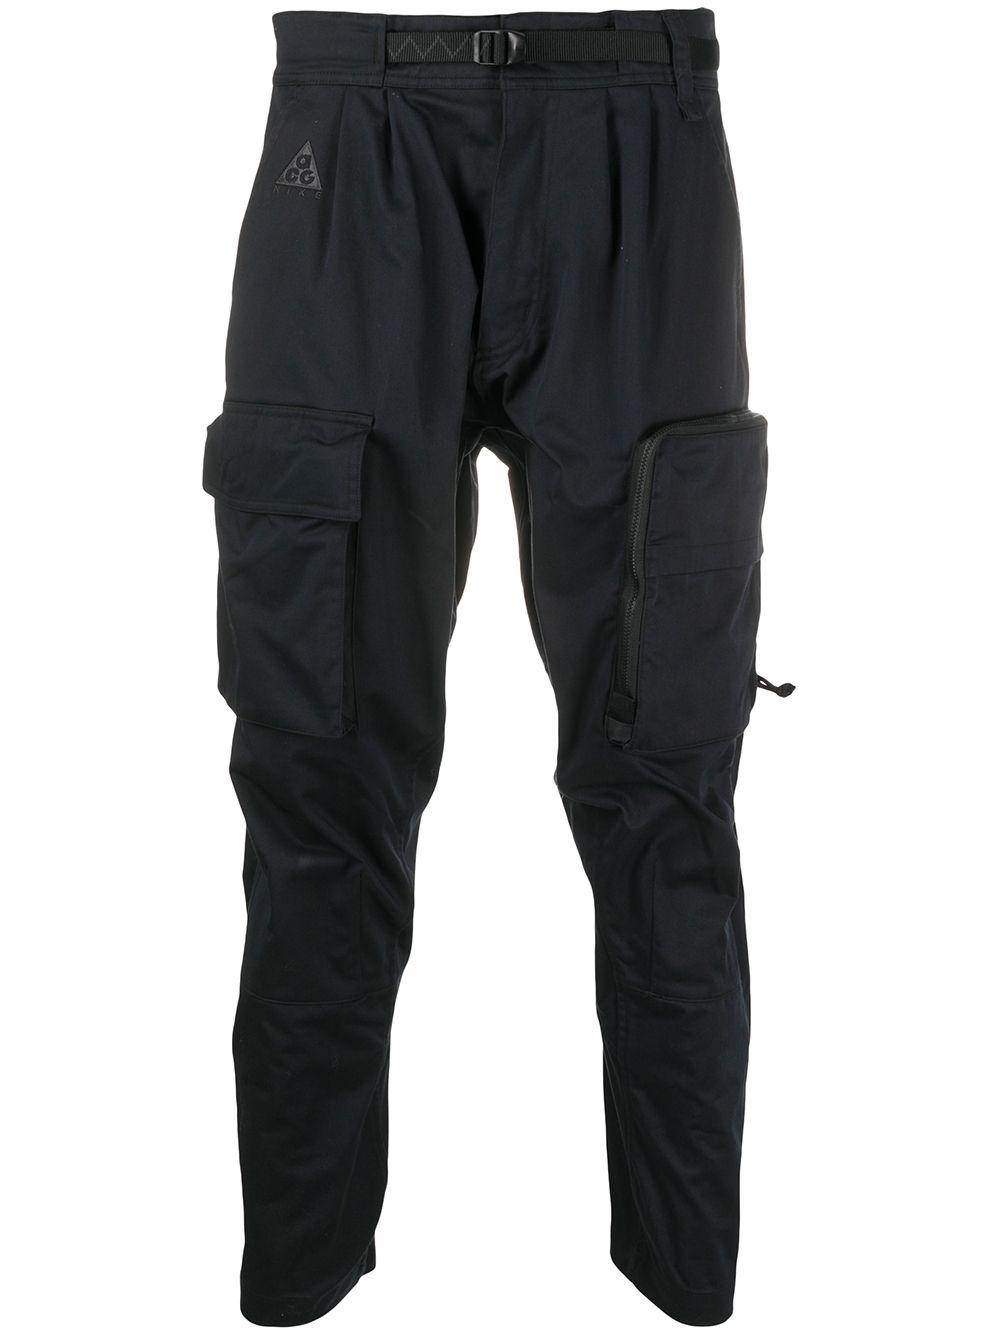 Nike Cotton Acg Cargo Trousers in Black for Men - Lyst